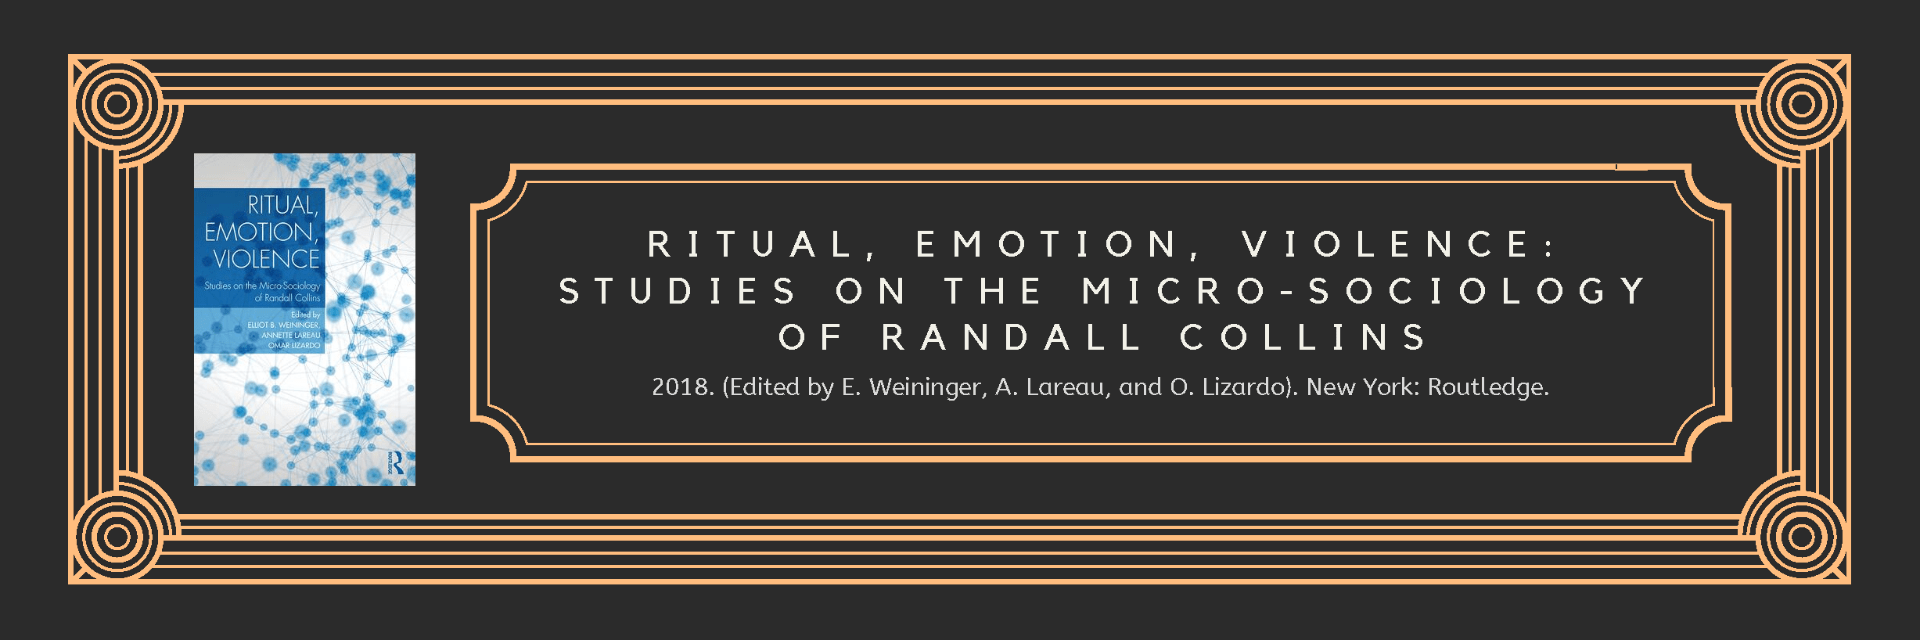 Ritual Emotion Violence Book Citation and Link